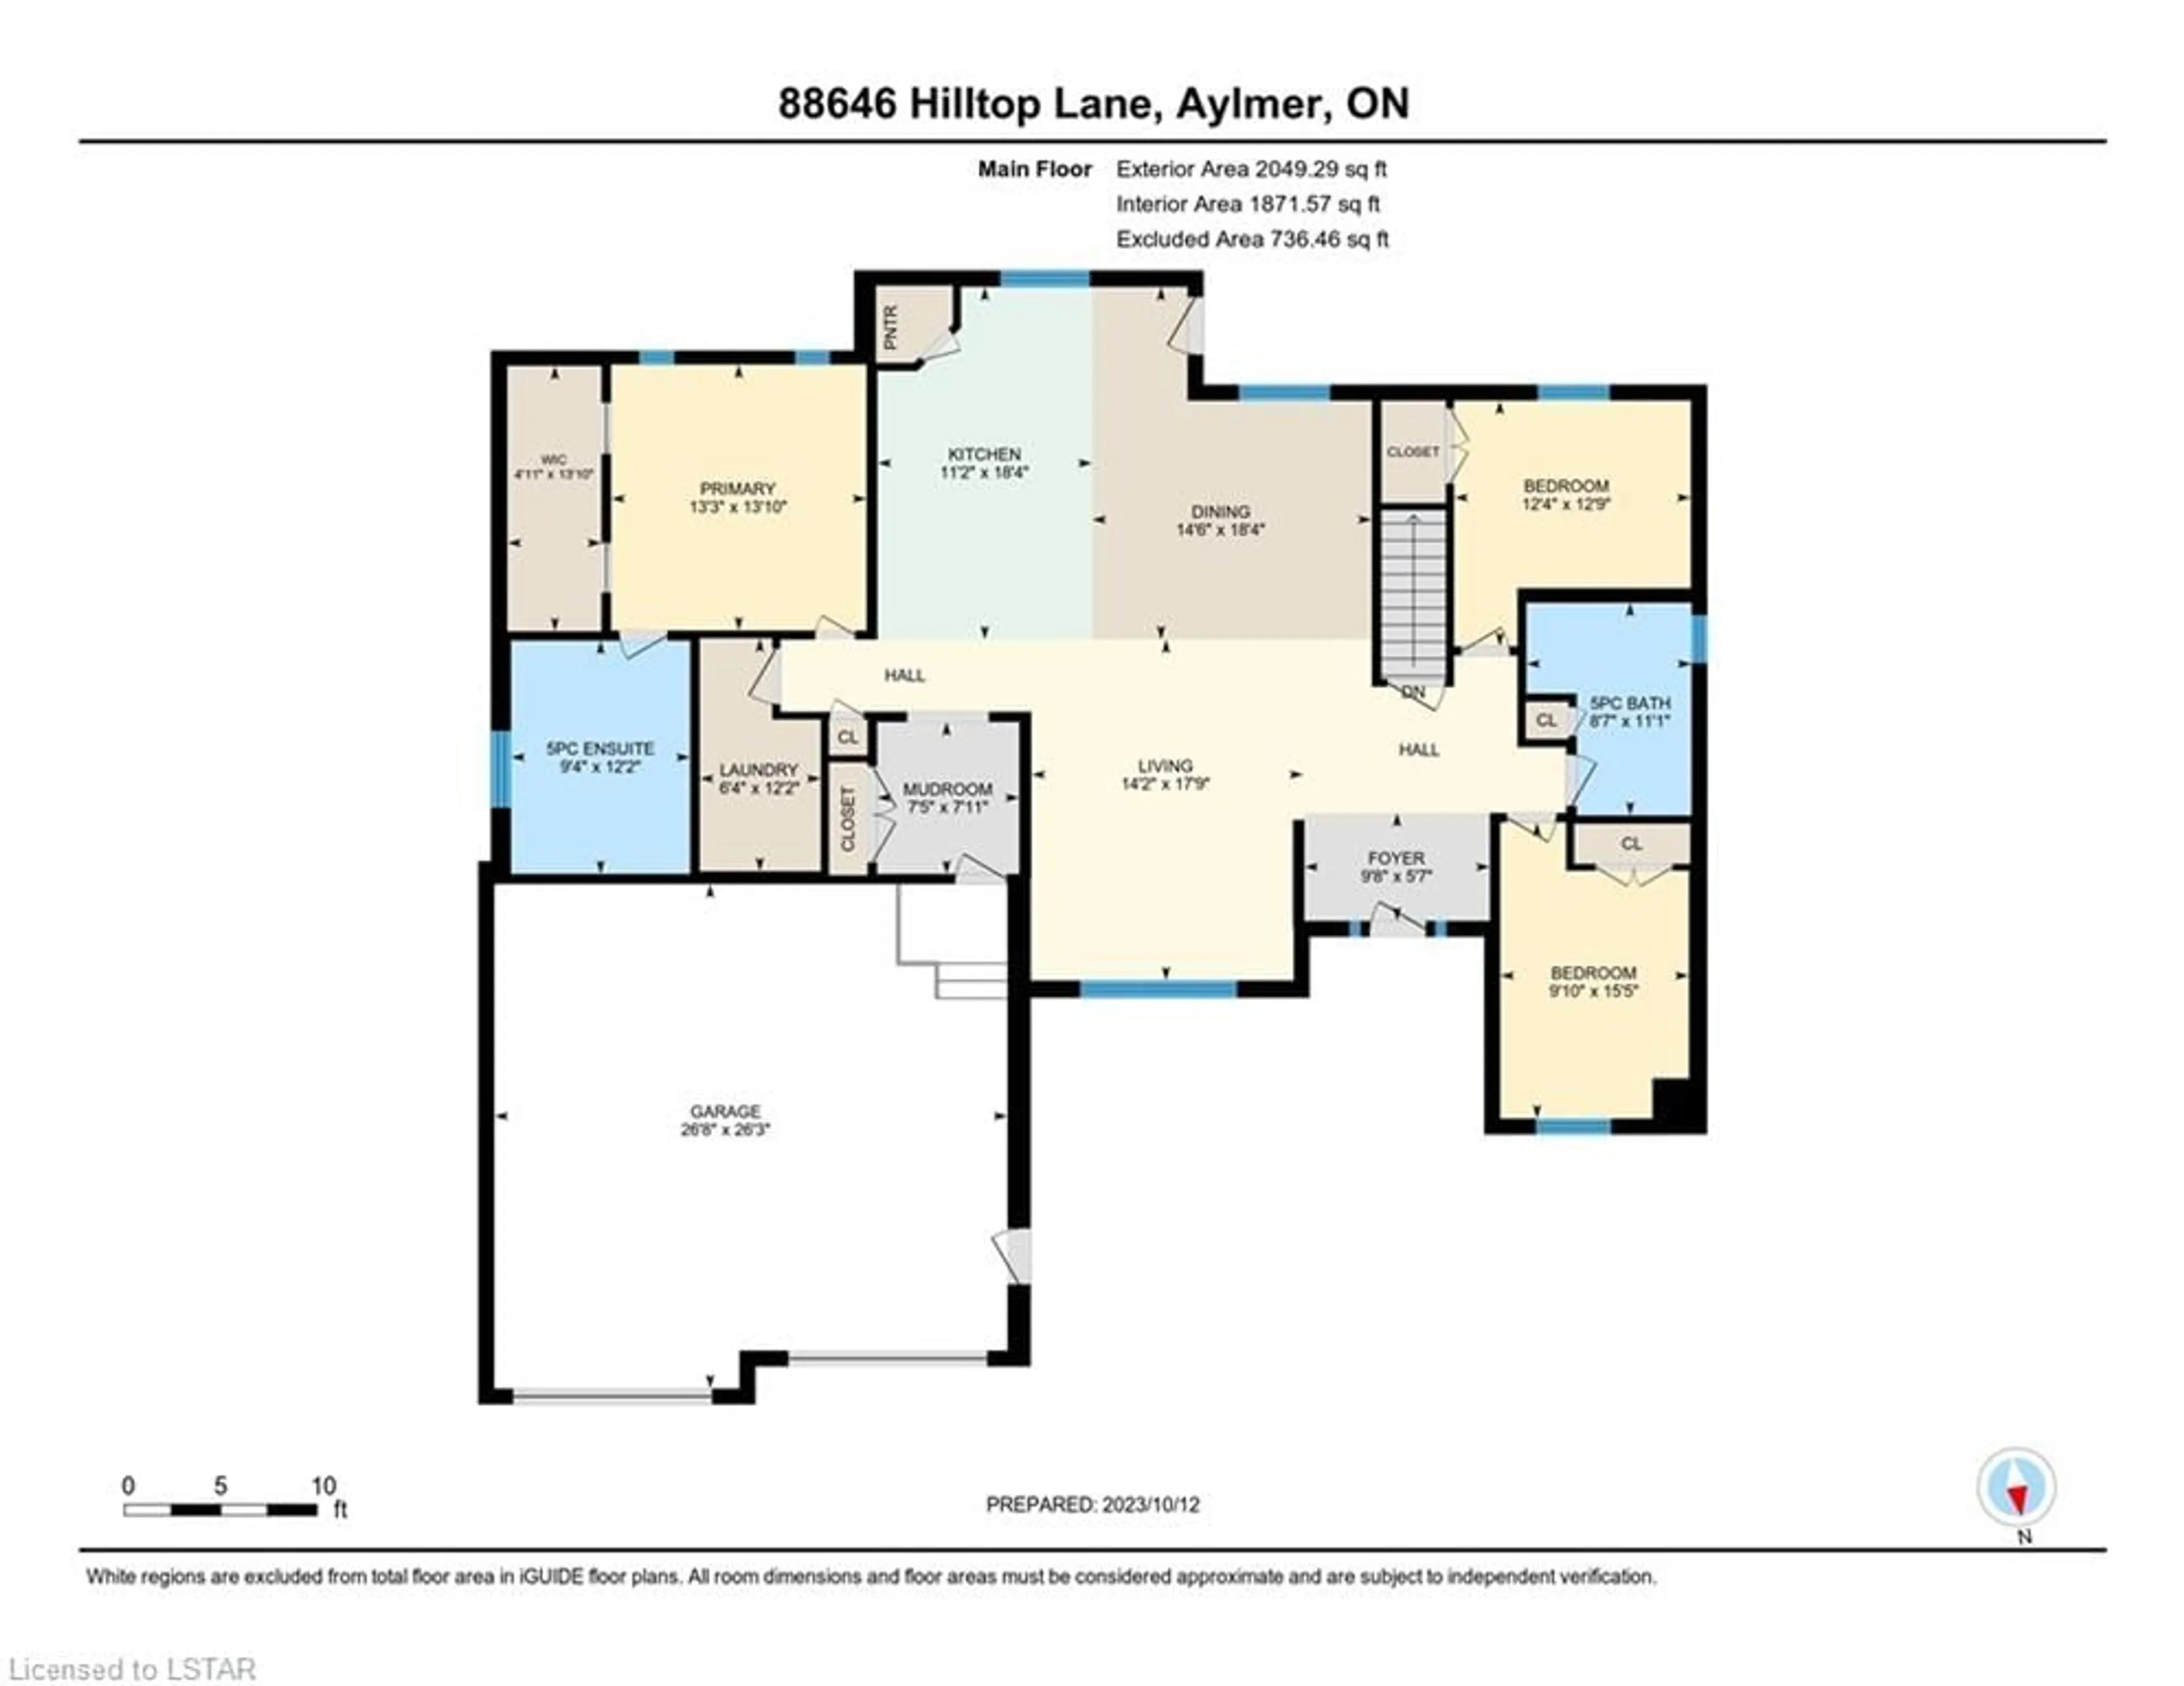 Floor plan for 88646 Hilltop Lane, Aylmer Ontario N5H 0B1